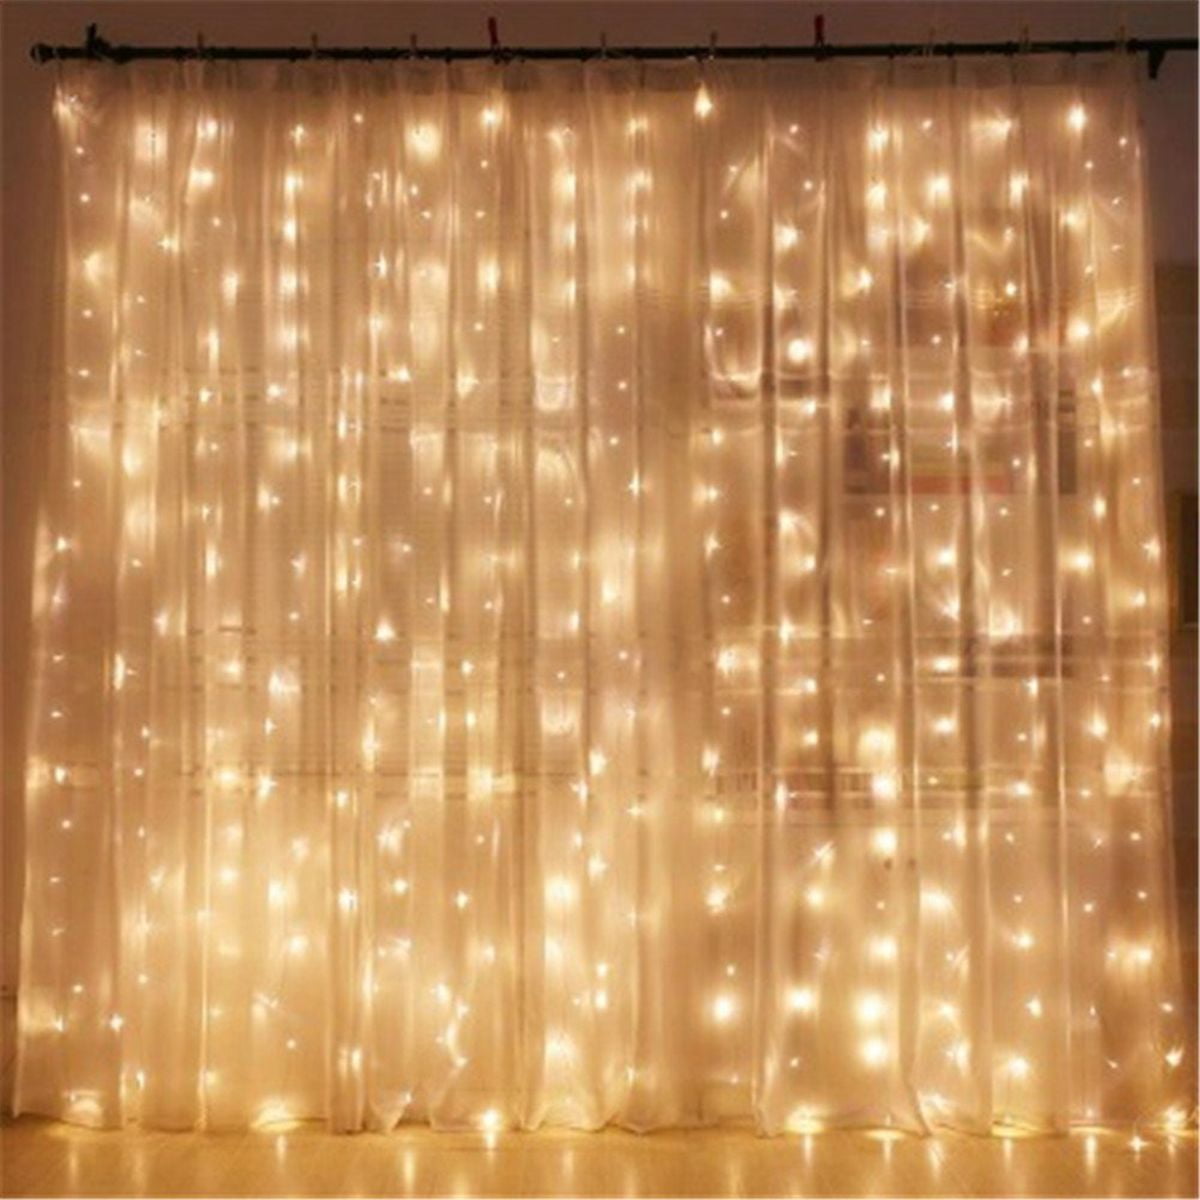 3*3M 300 LED Curtain String Fairy Light Christmas Wedding Lighting Waterfall Yc 